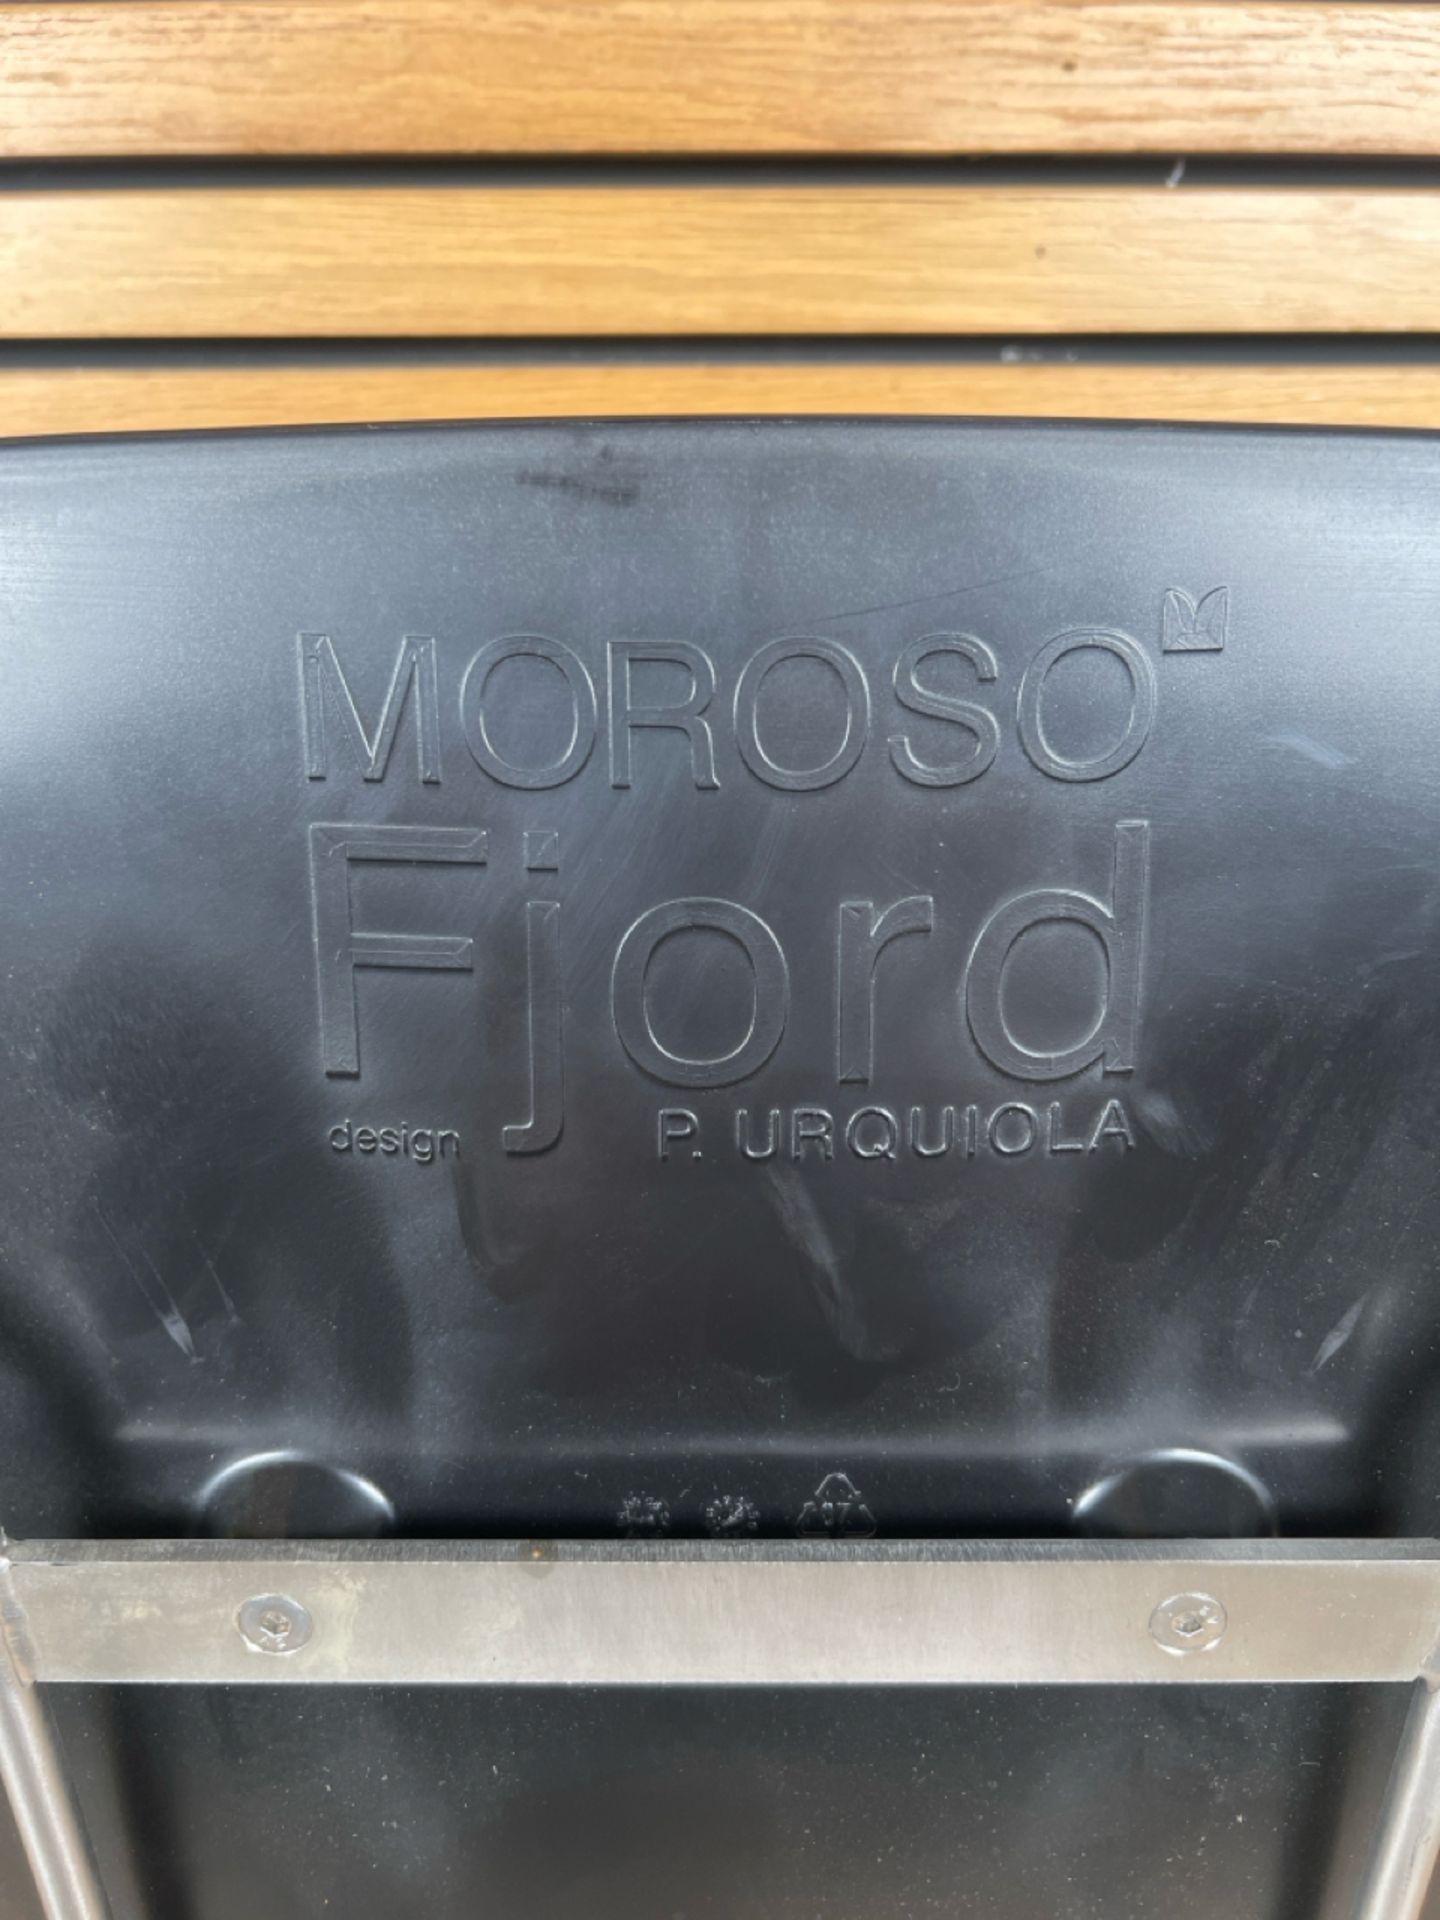 Moroso Fjord H Armchair Black - Image 4 of 4